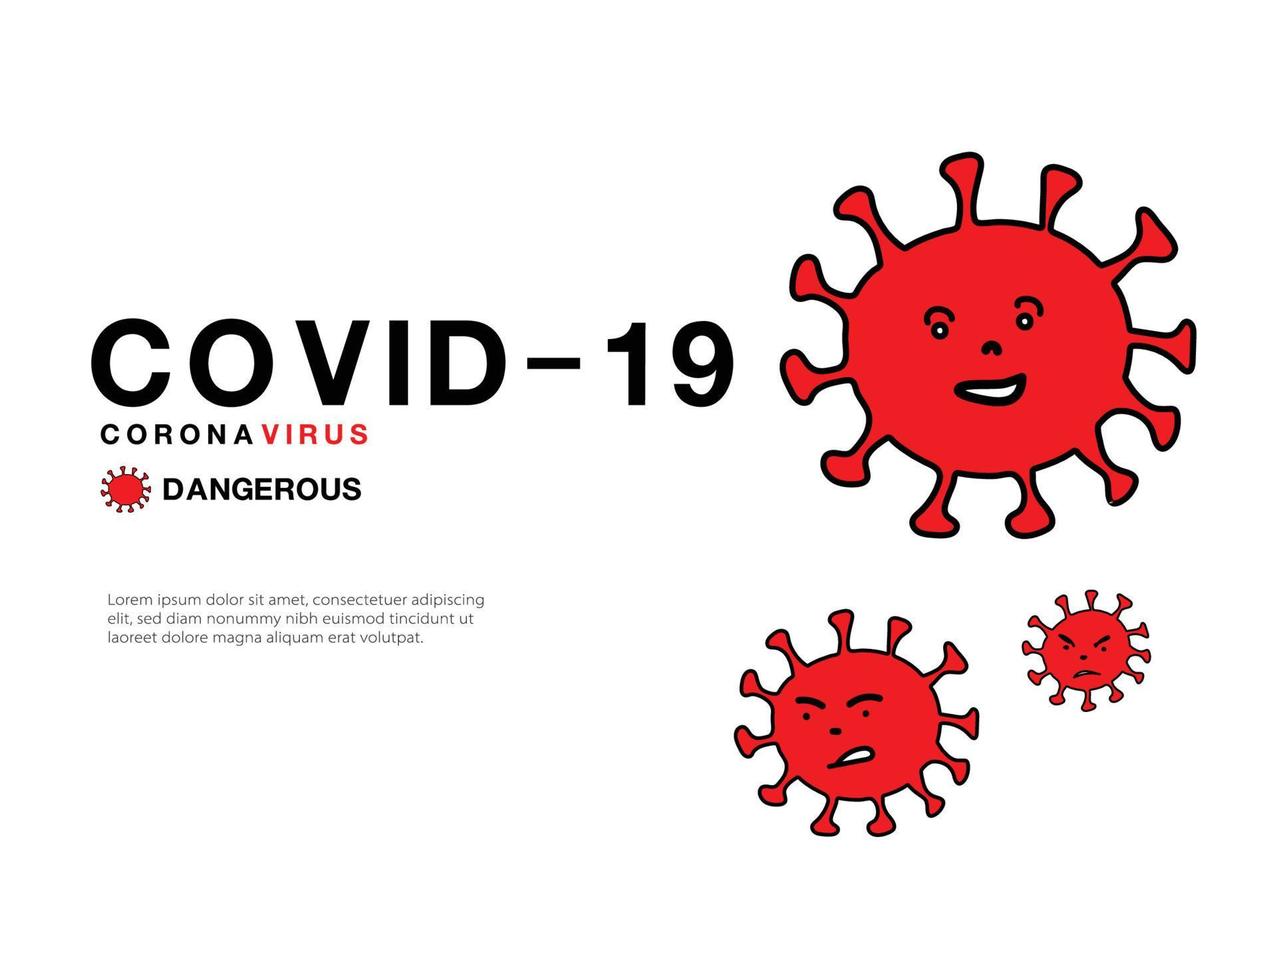 doença de coronavírus covid-19 vector illustraton, sinal, logotipo, desenho animado, símbolo, ícone médico